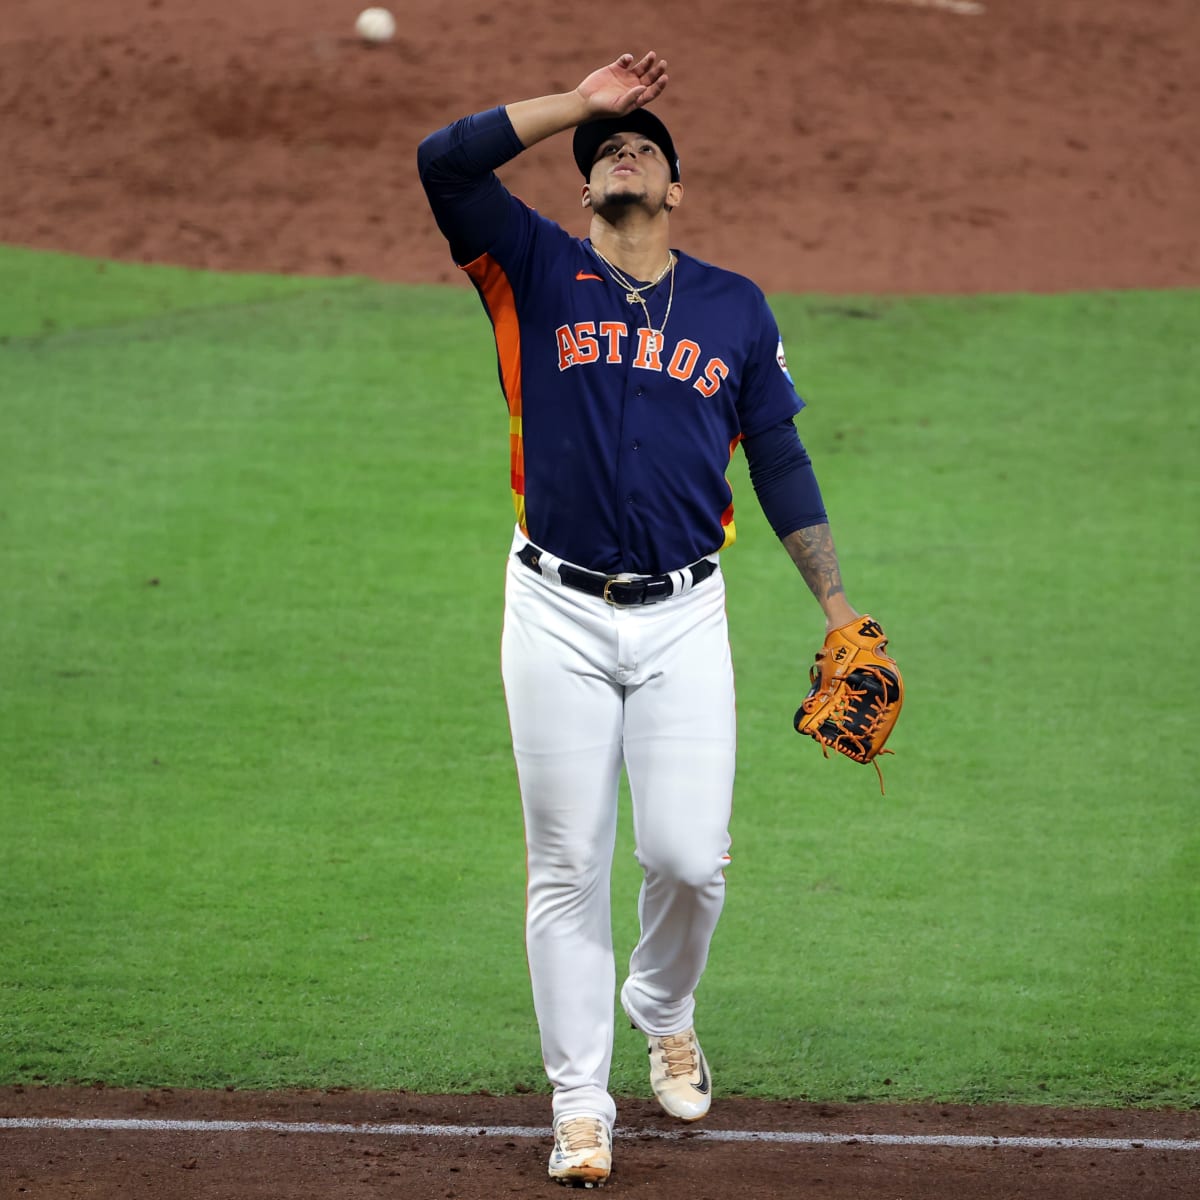 Inbox: Will Astros enter rebuild mode after 2021 season?